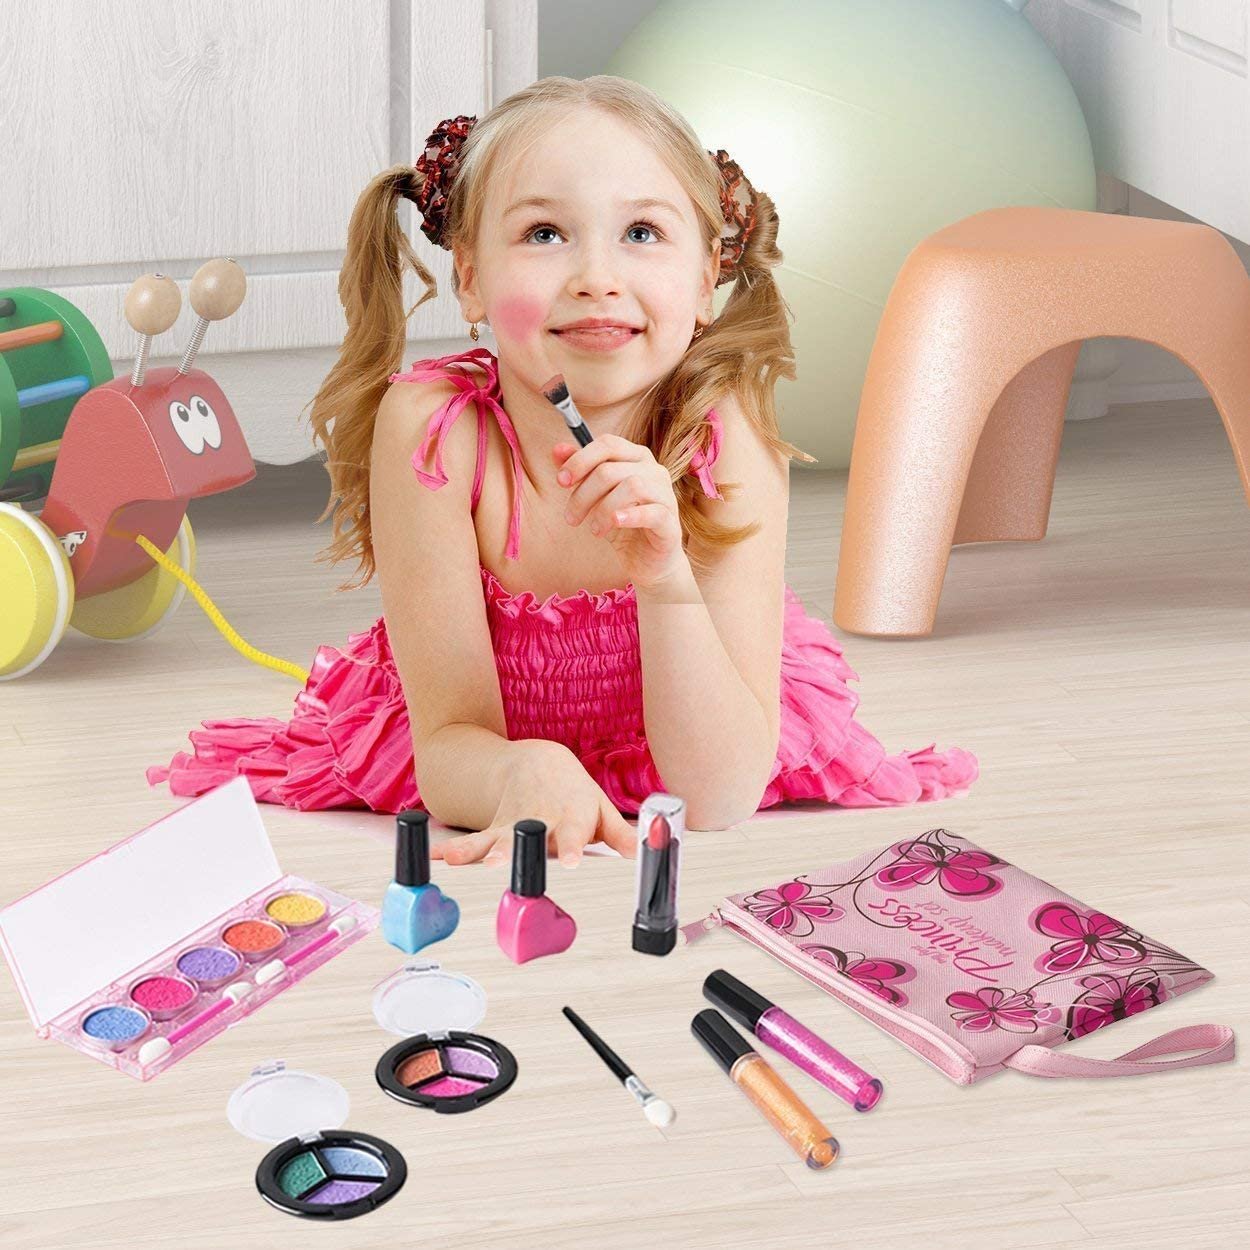 Playkidz Real Washable Play Make Up Set for Princess - Kids Makeup Kit for Girls Non Toxic - Full Makeup Dress Up Set with Bag. 11 PC - image 3 of 7